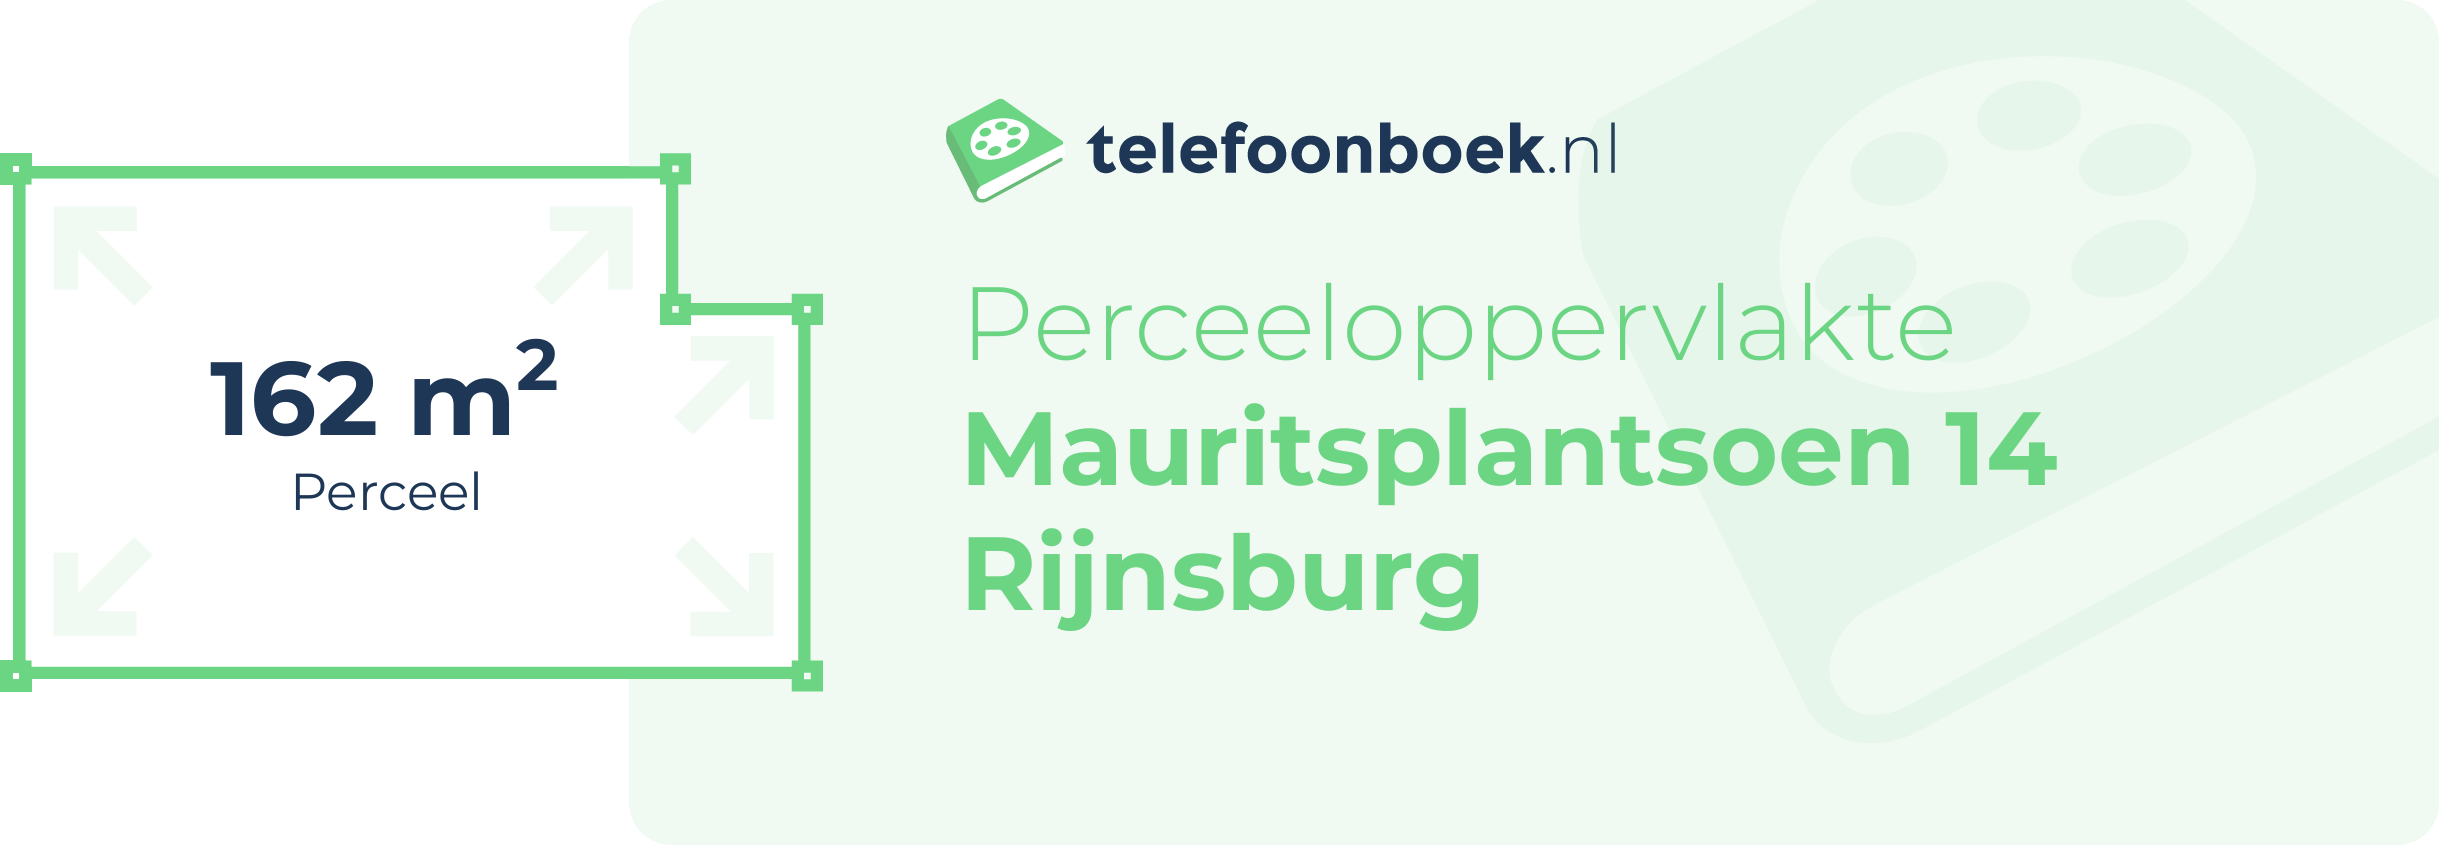 Perceeloppervlakte Mauritsplantsoen 14 Rijnsburg